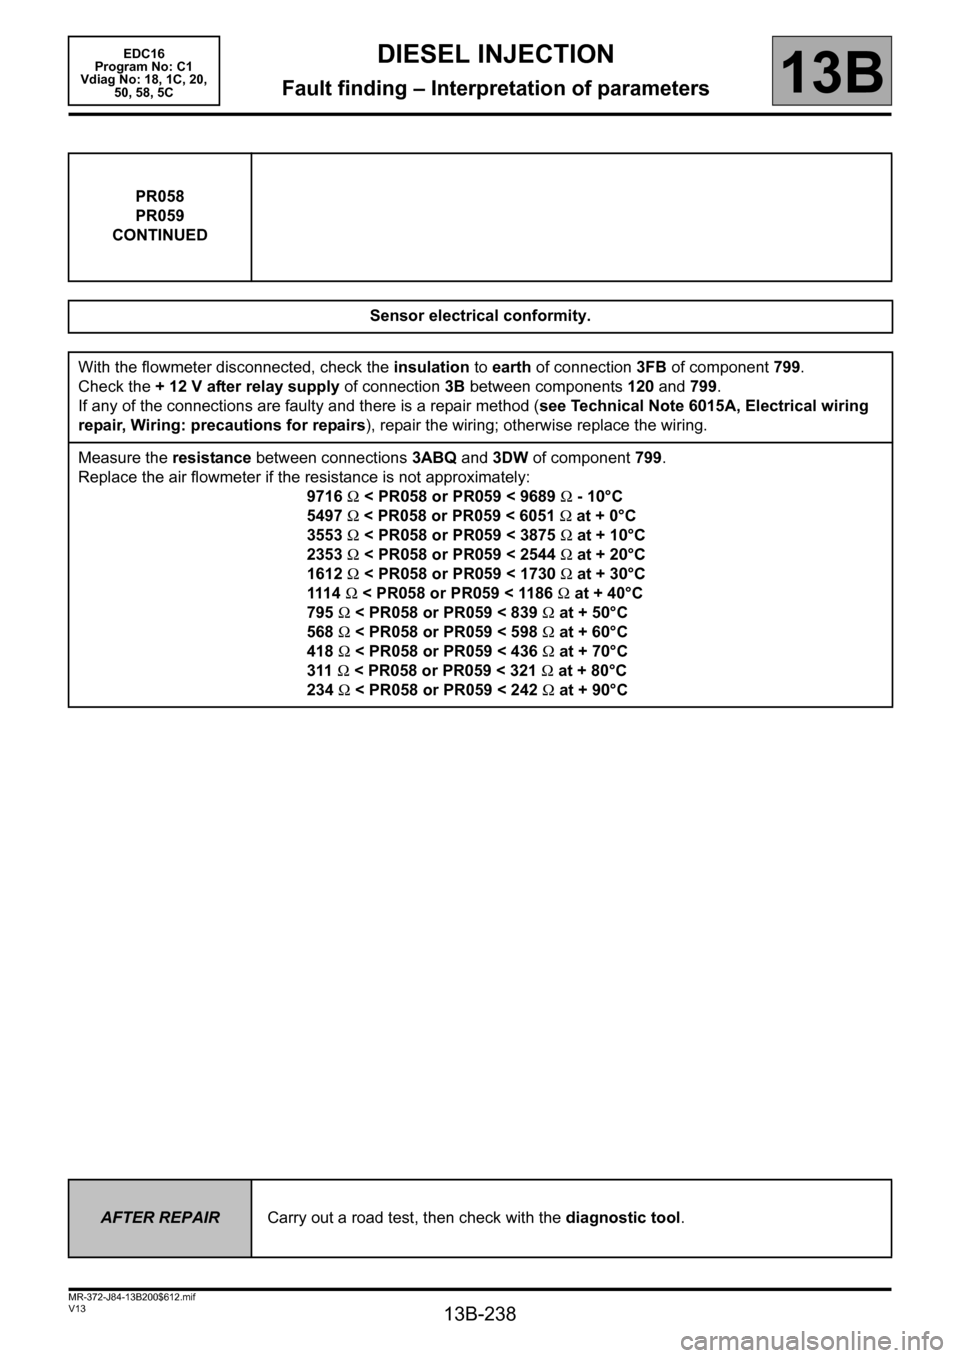 RENAULT SCENIC 2011 J95 / 3.G Engine And Peripherals EDC16 Workshop Manual 13B-238
MR-372-J84-13B200$612.mif
V13
DIESEL INJECTION
Fault finding – Interpretation of parameters
EDC16  
Program No: C1 
Vdiag No: 18, 1C, 20, 
50, 58, 5C
13B
PR058
PR059
CONTINUED
Sensor electri